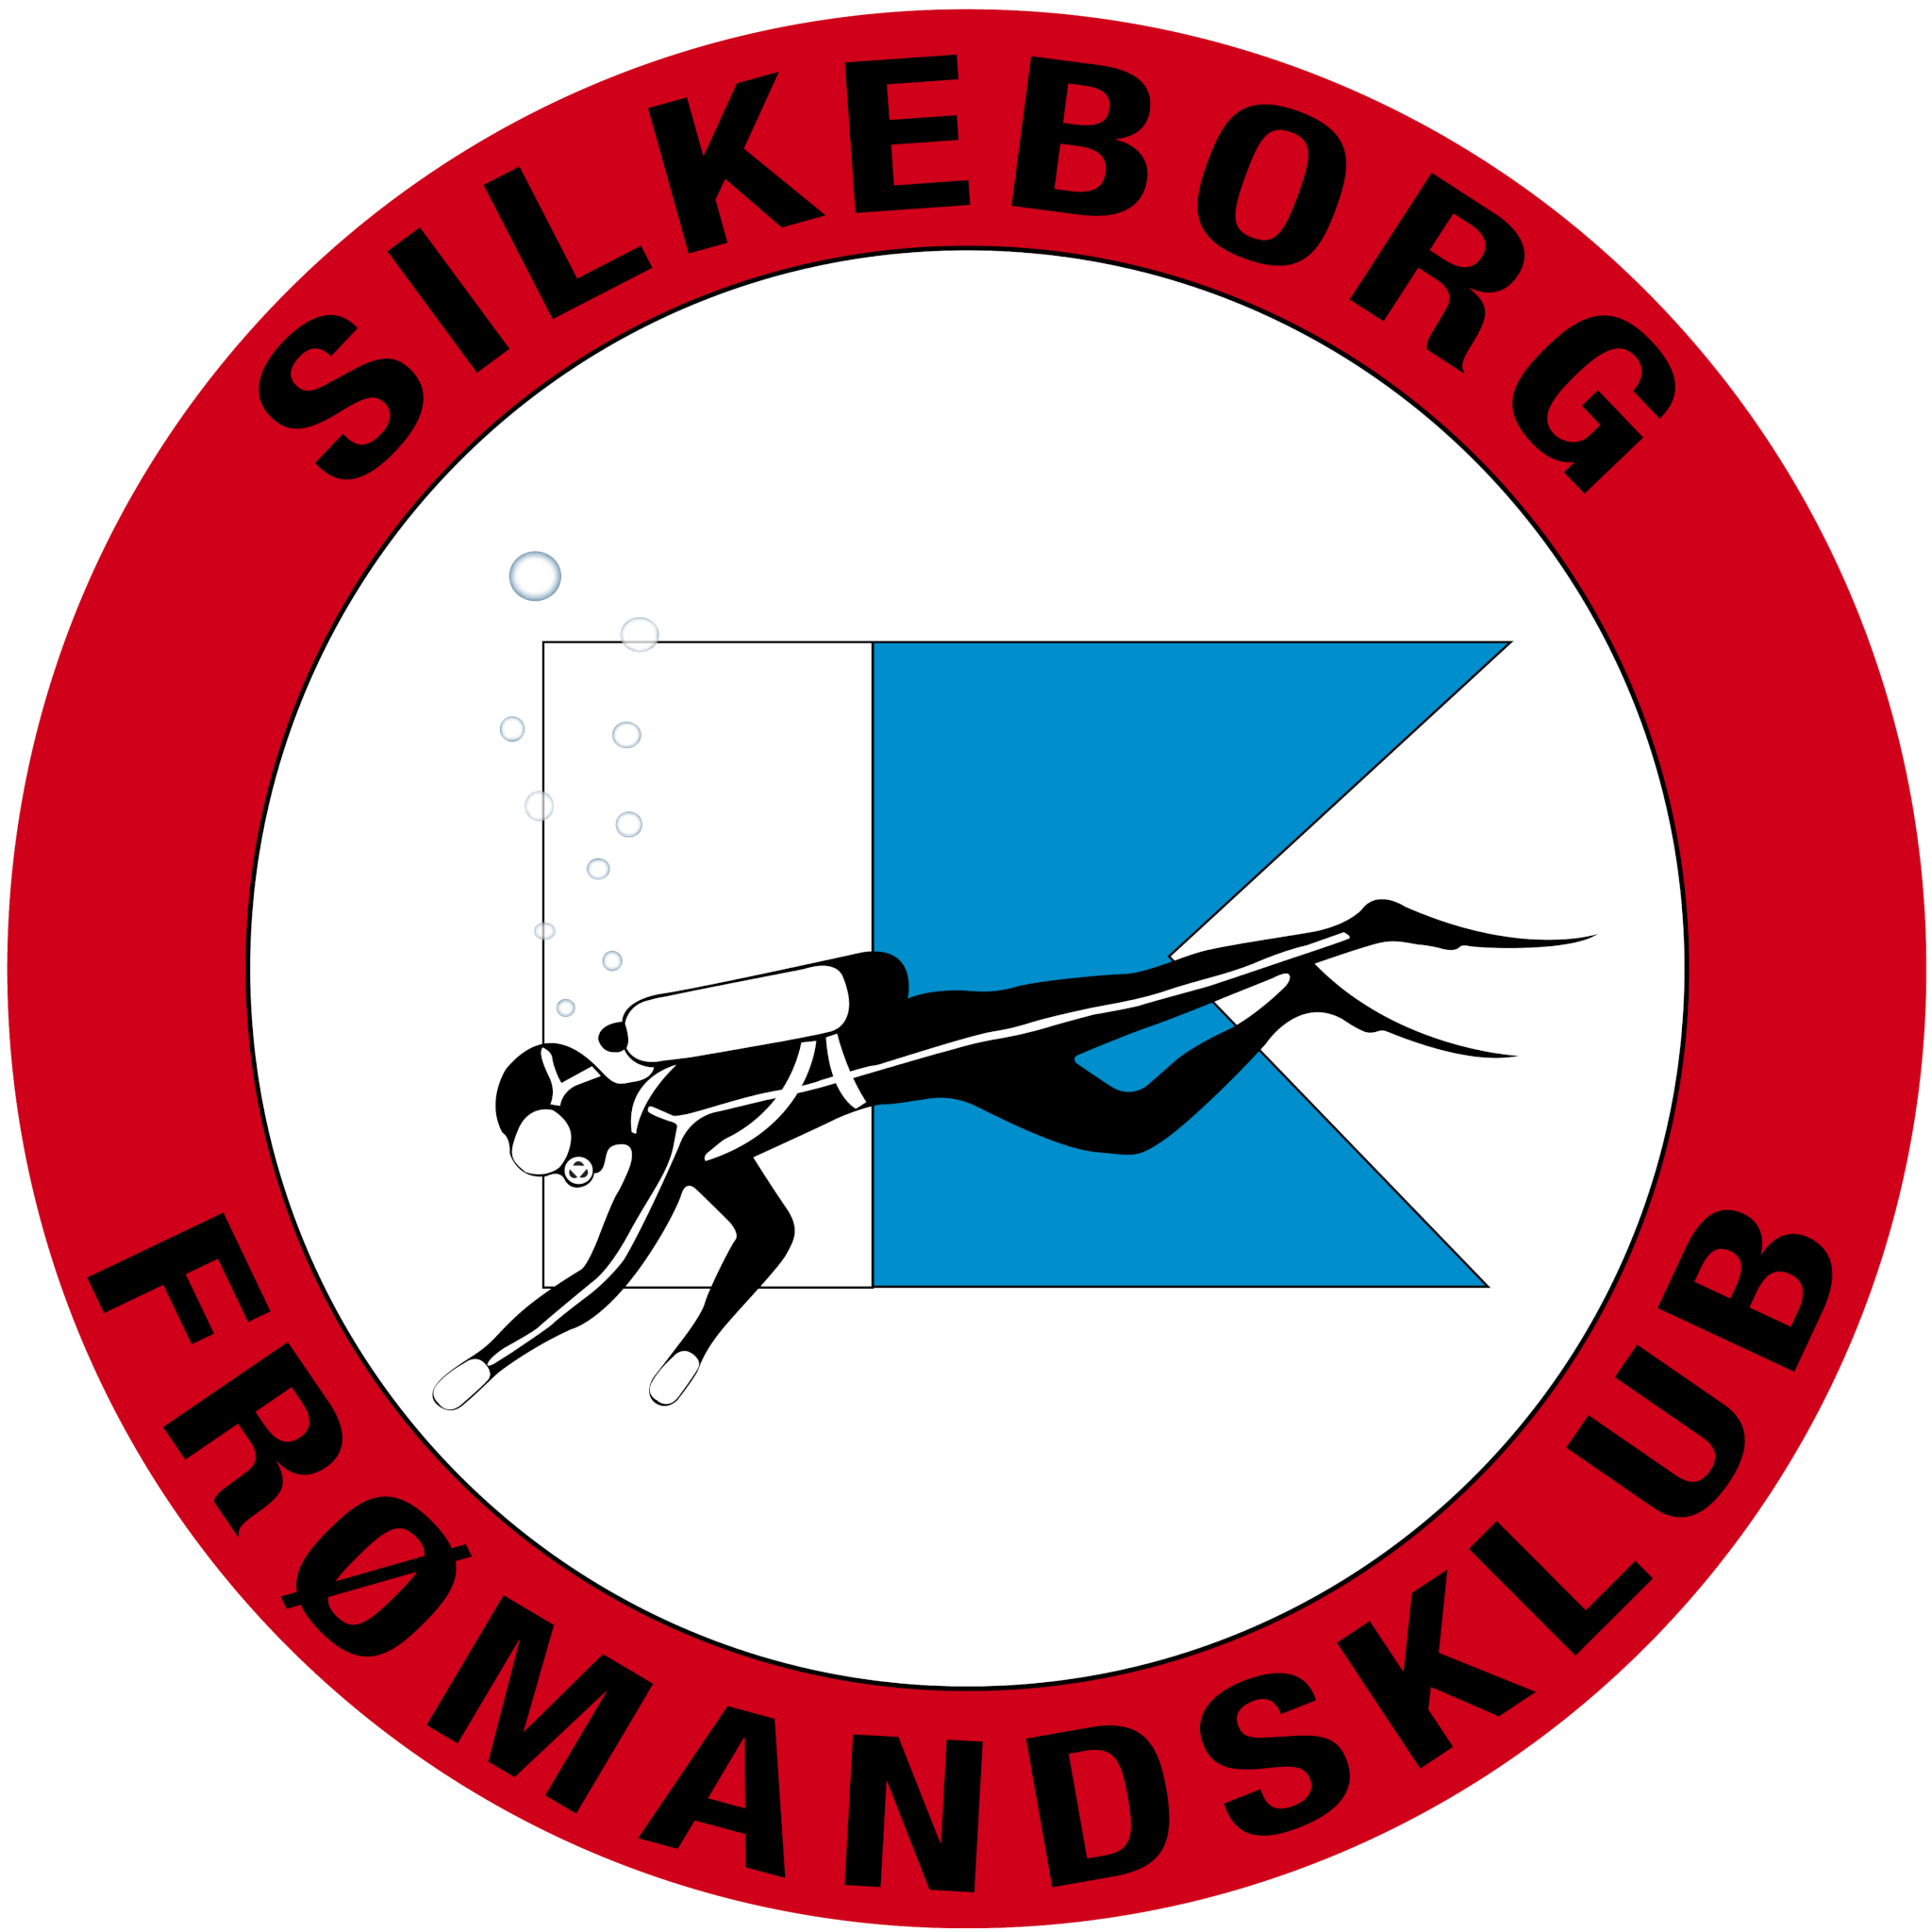 sfk-logo kopi